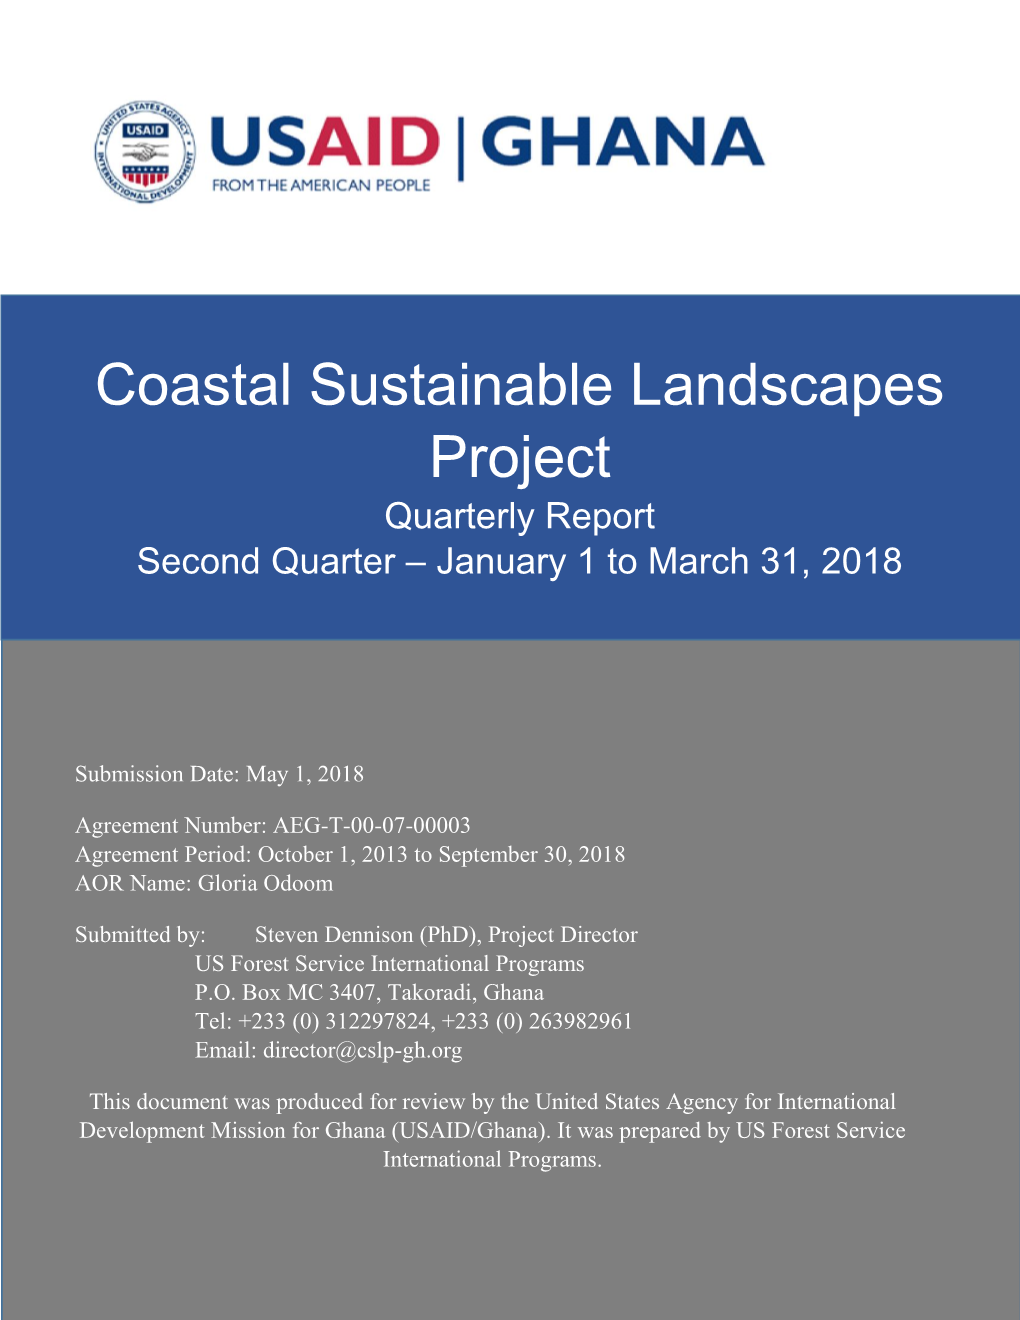 Coastal Sustainable Landscapes Project